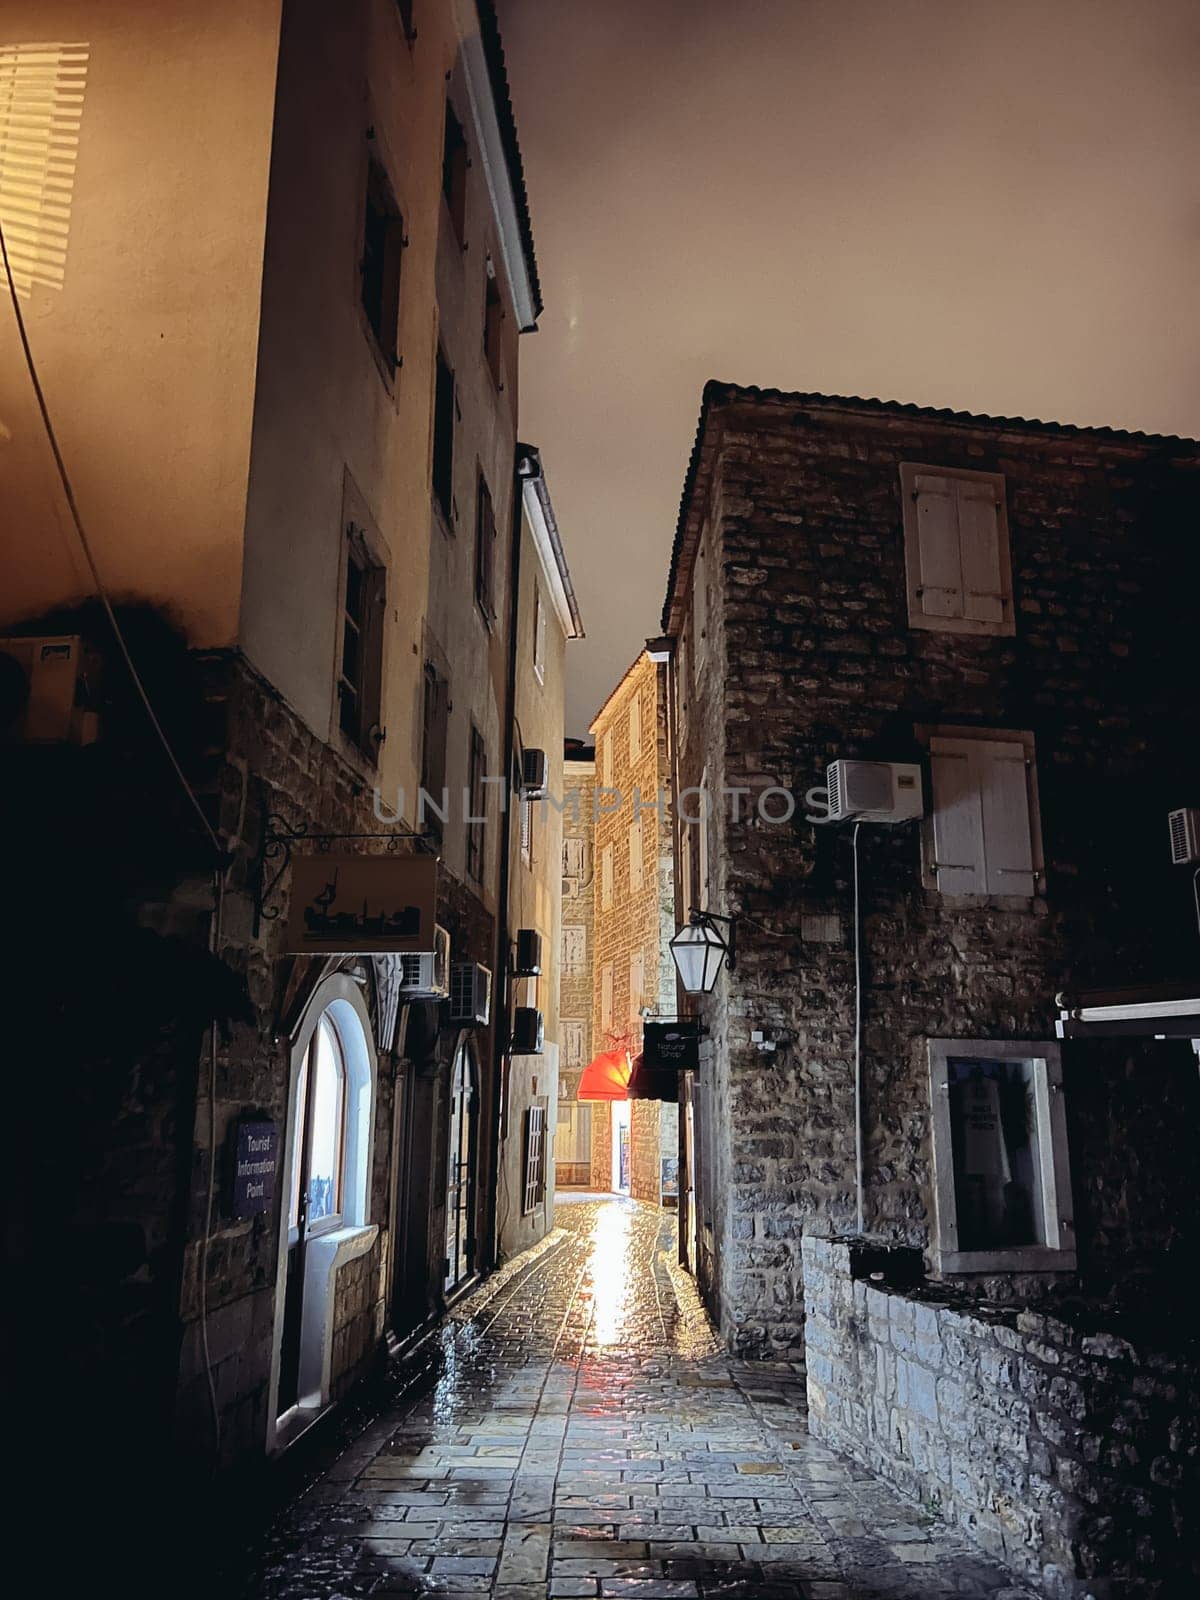 Narrow illuminated ancient street with luminous windows. High quality photo